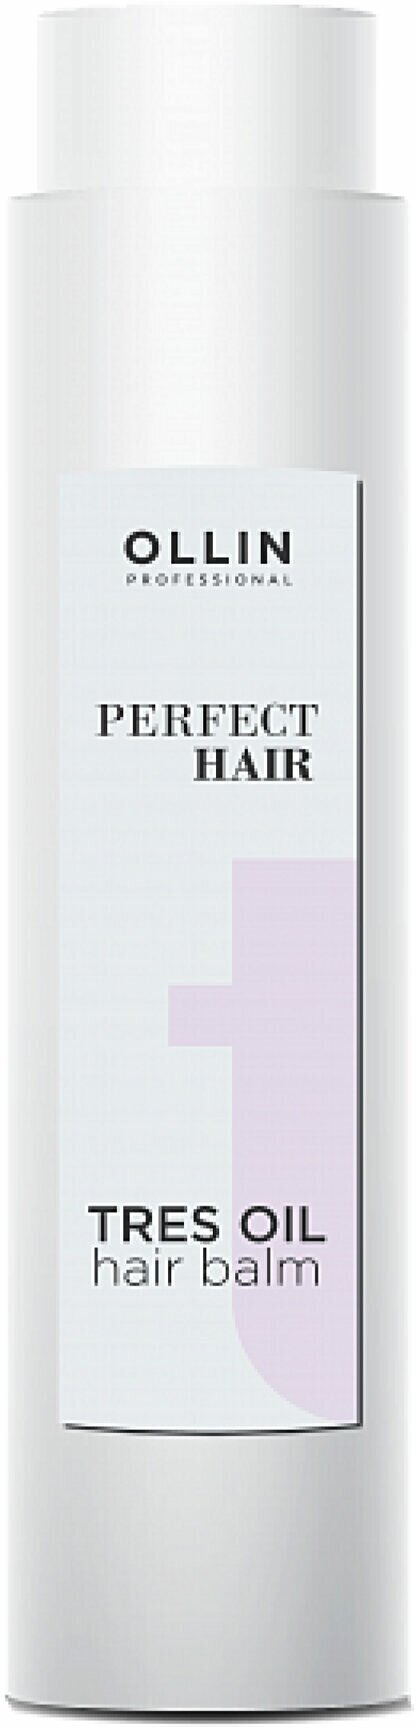 OLLIN PERFECT HAIR TRES OIL Бальзам для волос 400мл